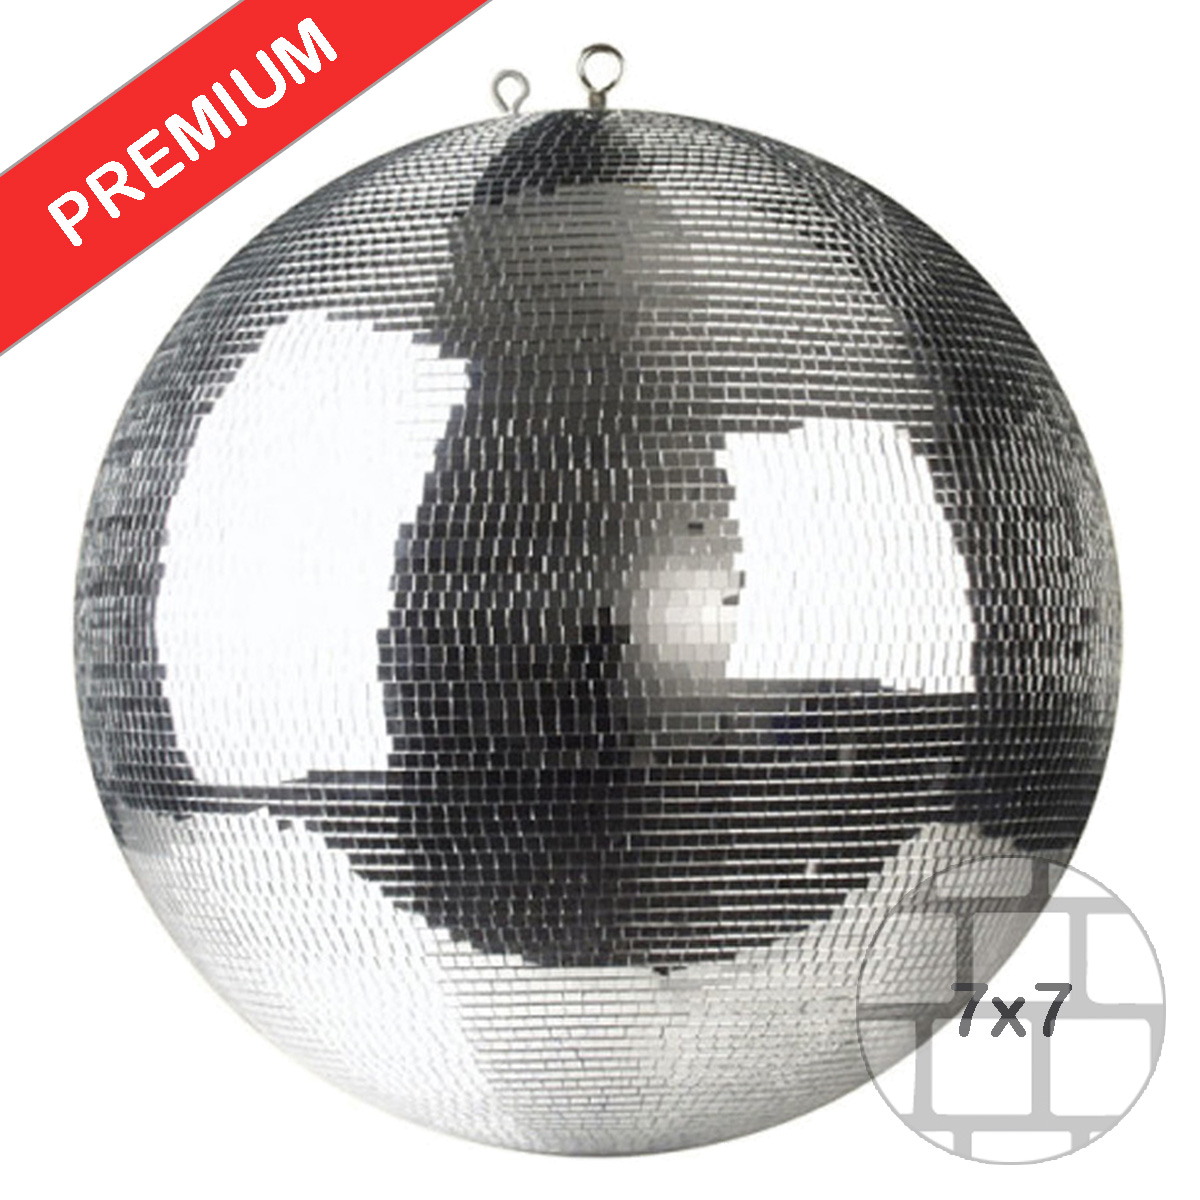 Spiegelkugel 150cm silber chrom- Diskokugel (Discokugel) Party Lichteffekt - Echtglas - mirrorball safety silver chrome color